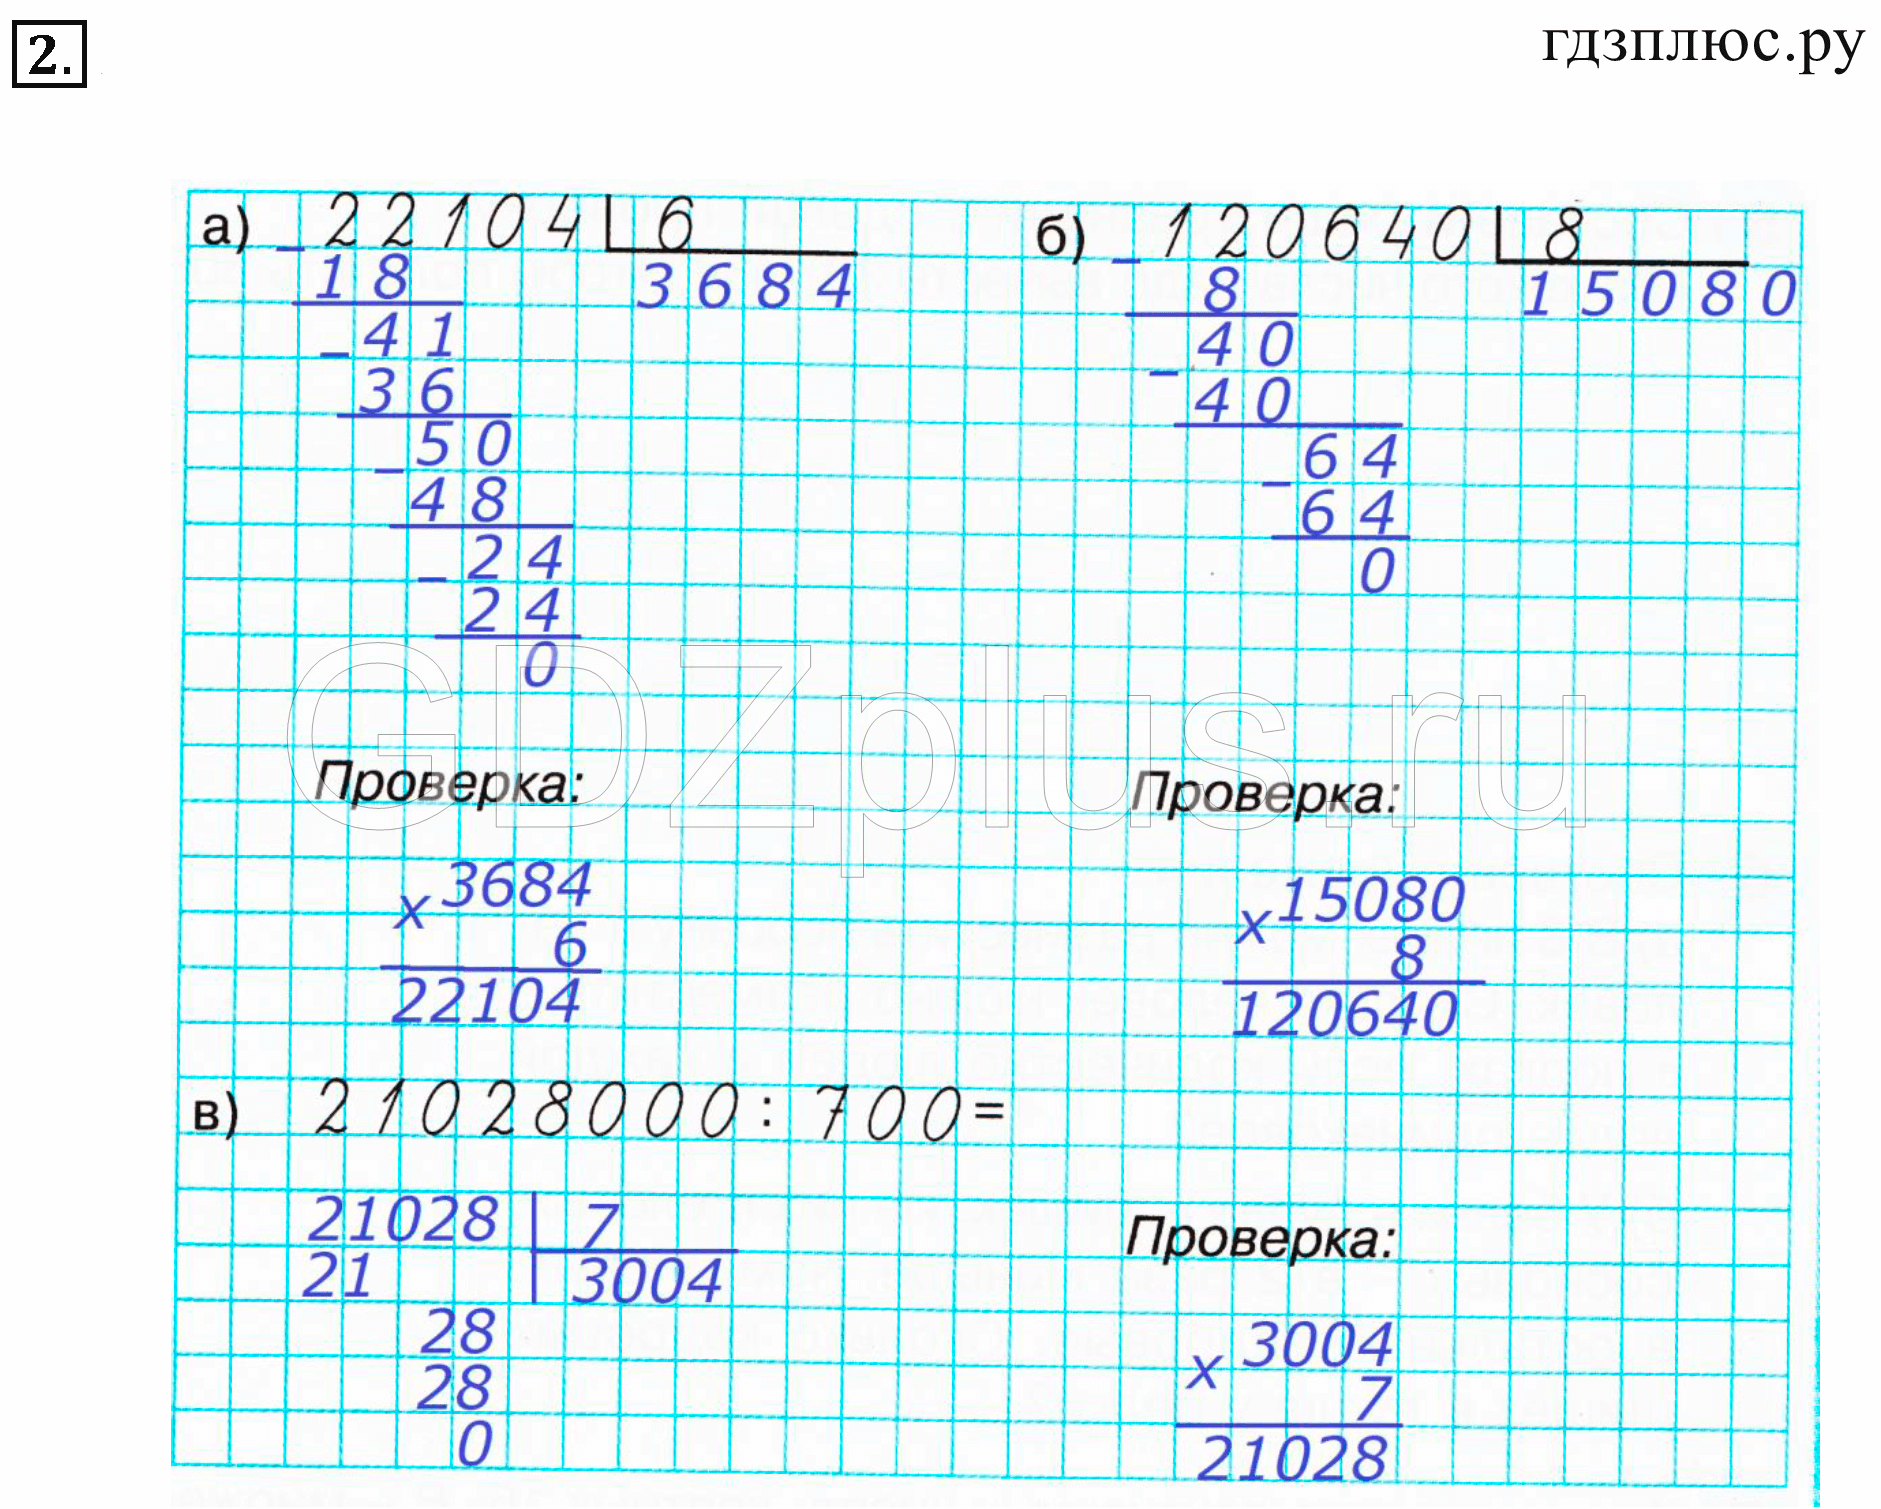 Математика страница 38 тест вариант 1